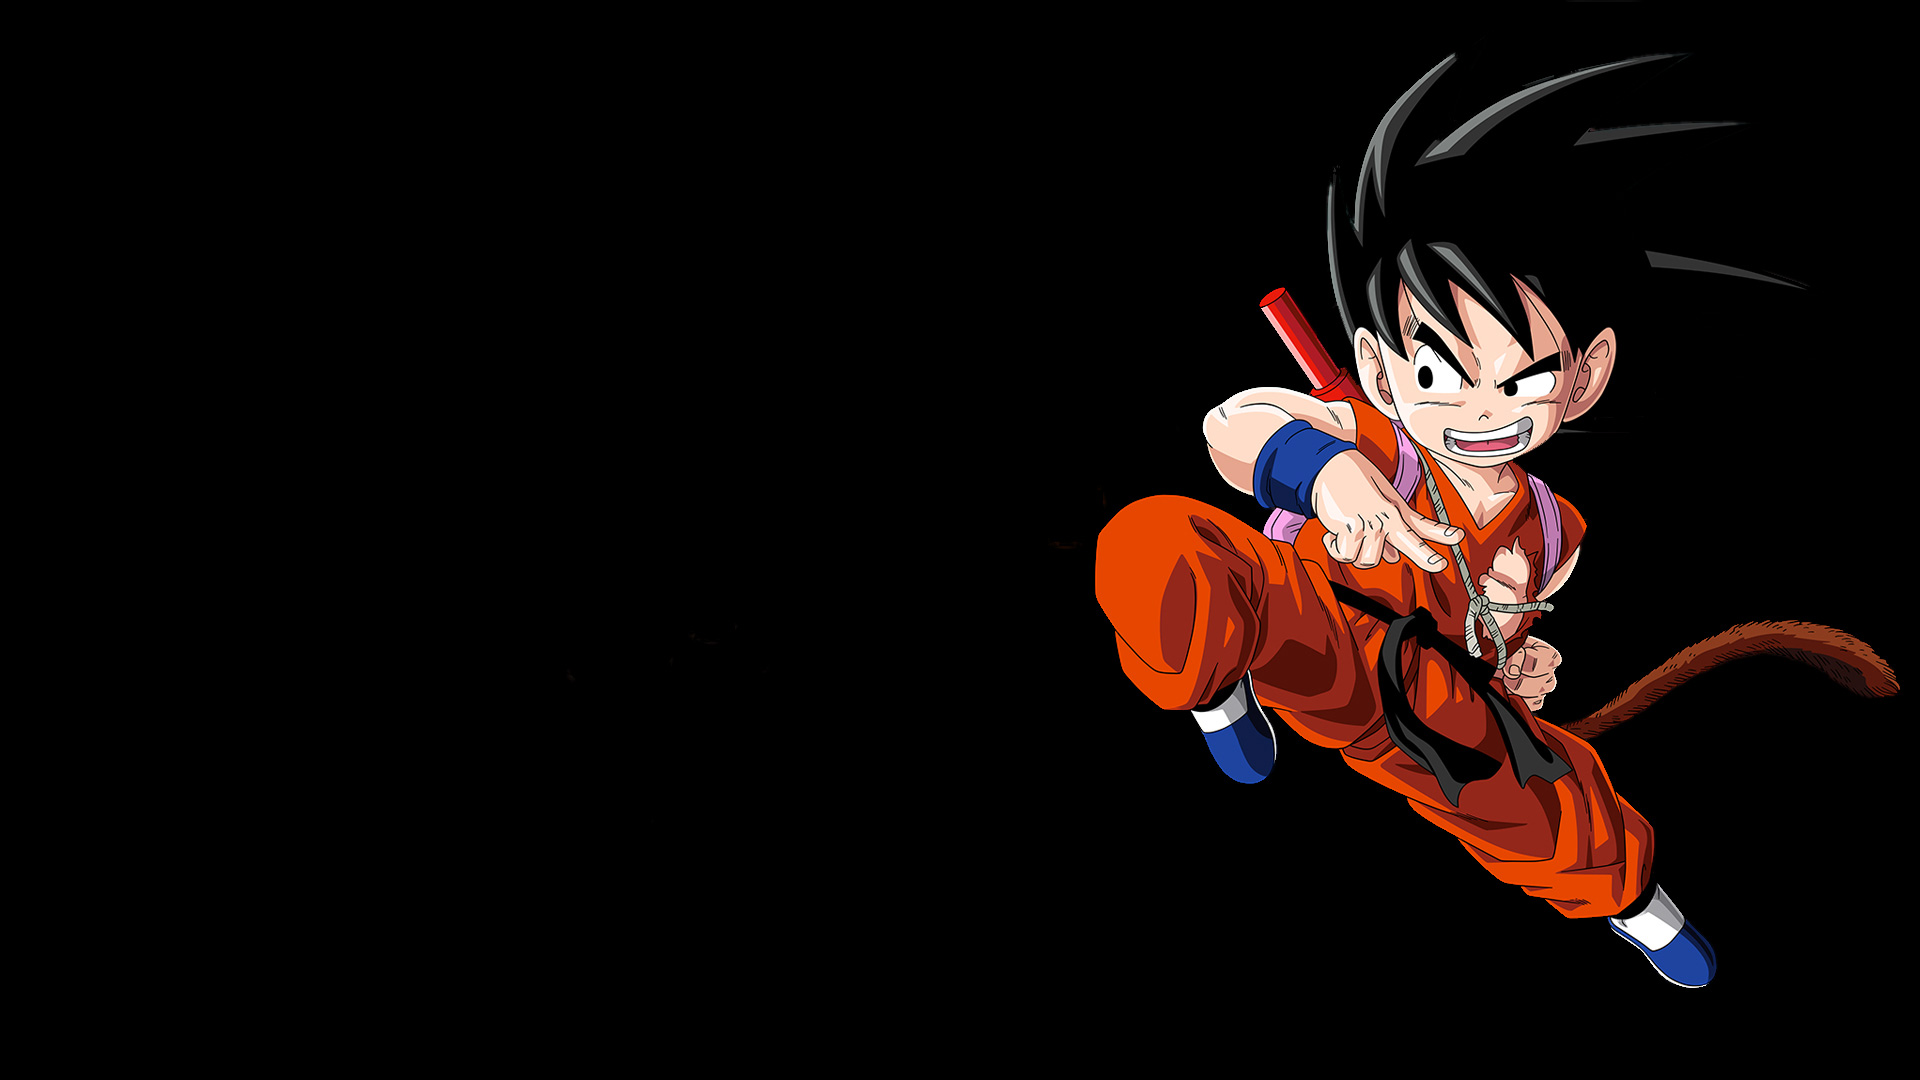 Download Goku Wallpapers in HD | Watch Dragon Ball Super